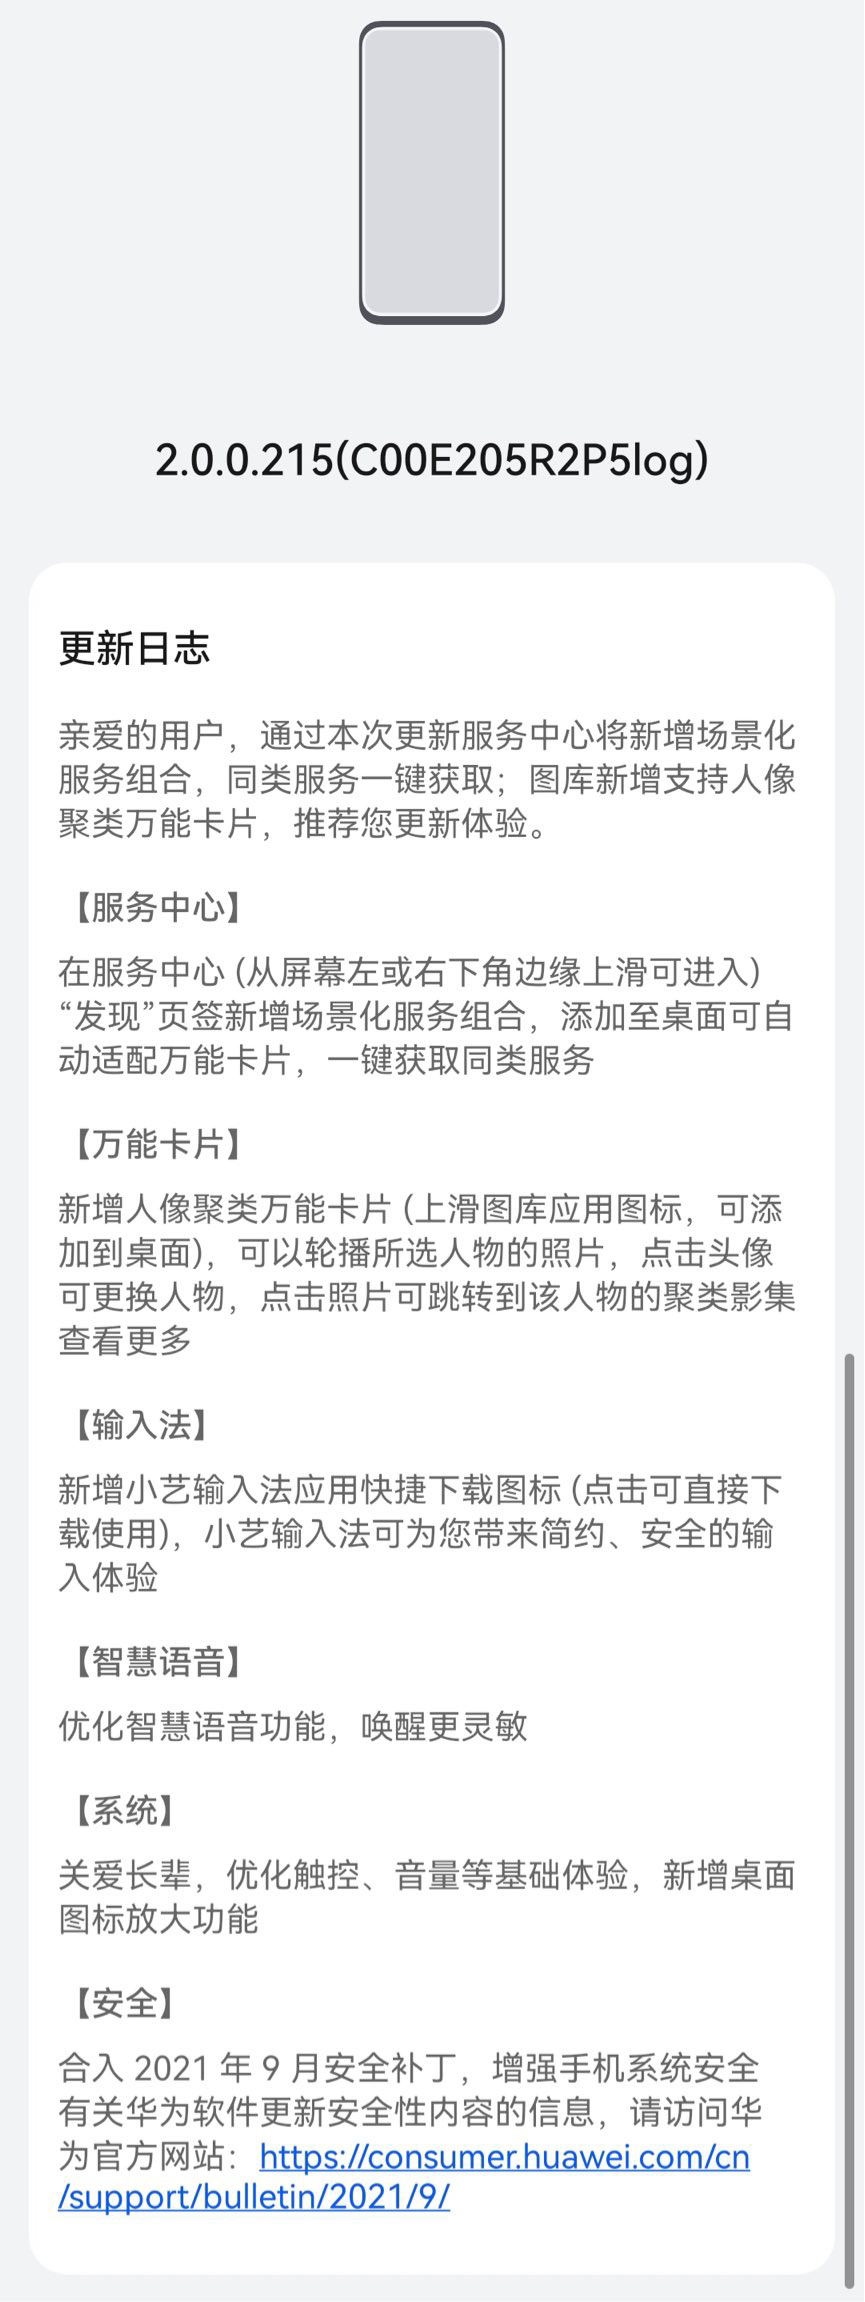 Huawei Mate 10 series HarmonyOS 2.0.0.215 update c